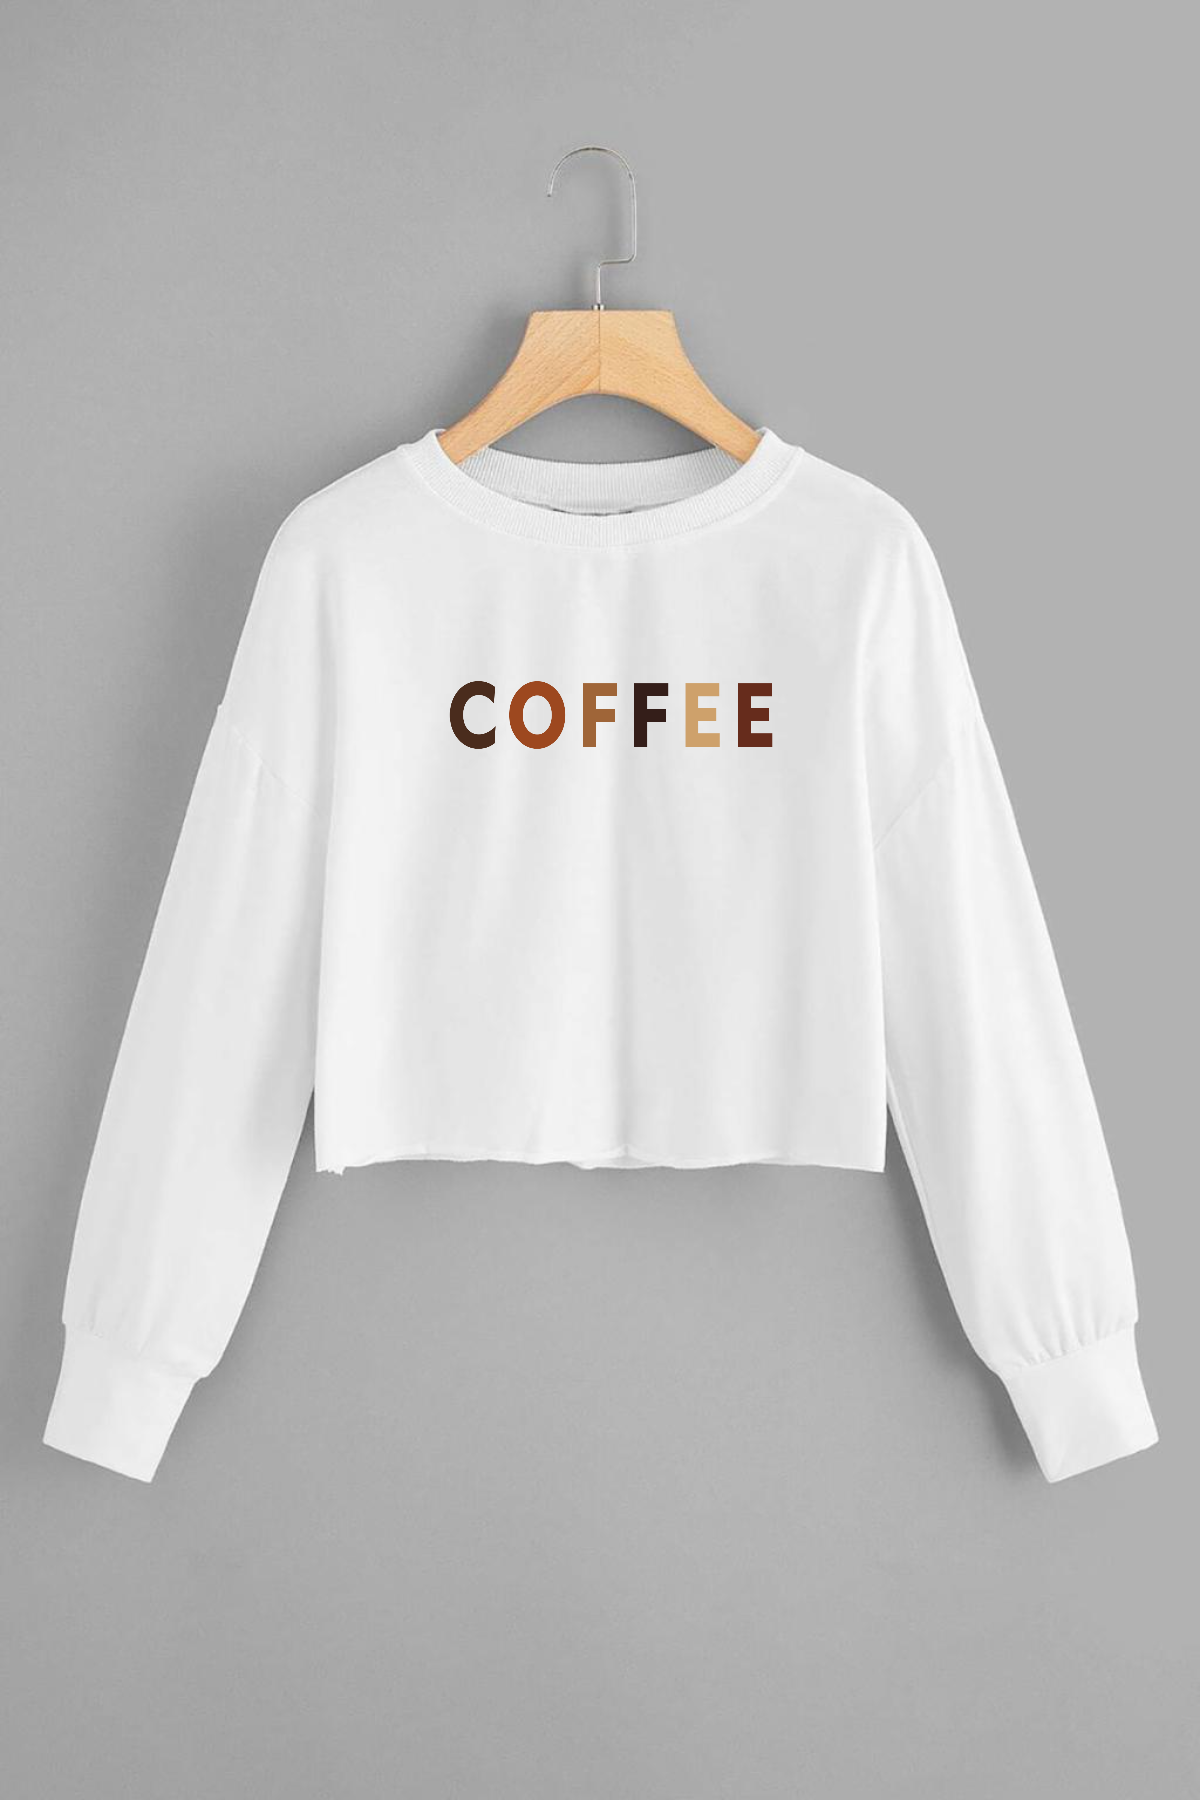 Coffee Crop Sweatshirt